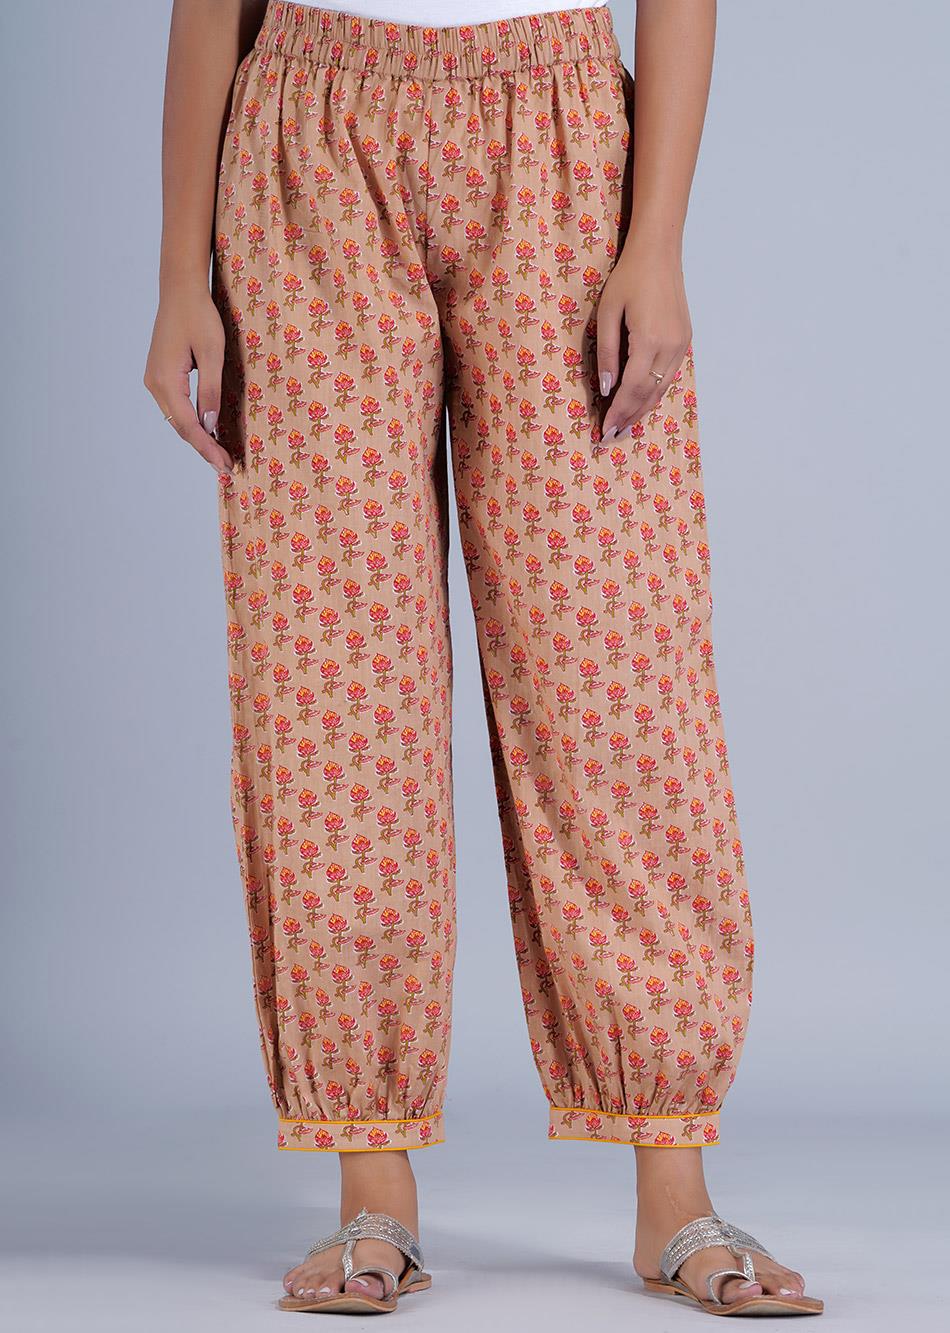 Orange Printed Afghani Pants By Jovi Fashion